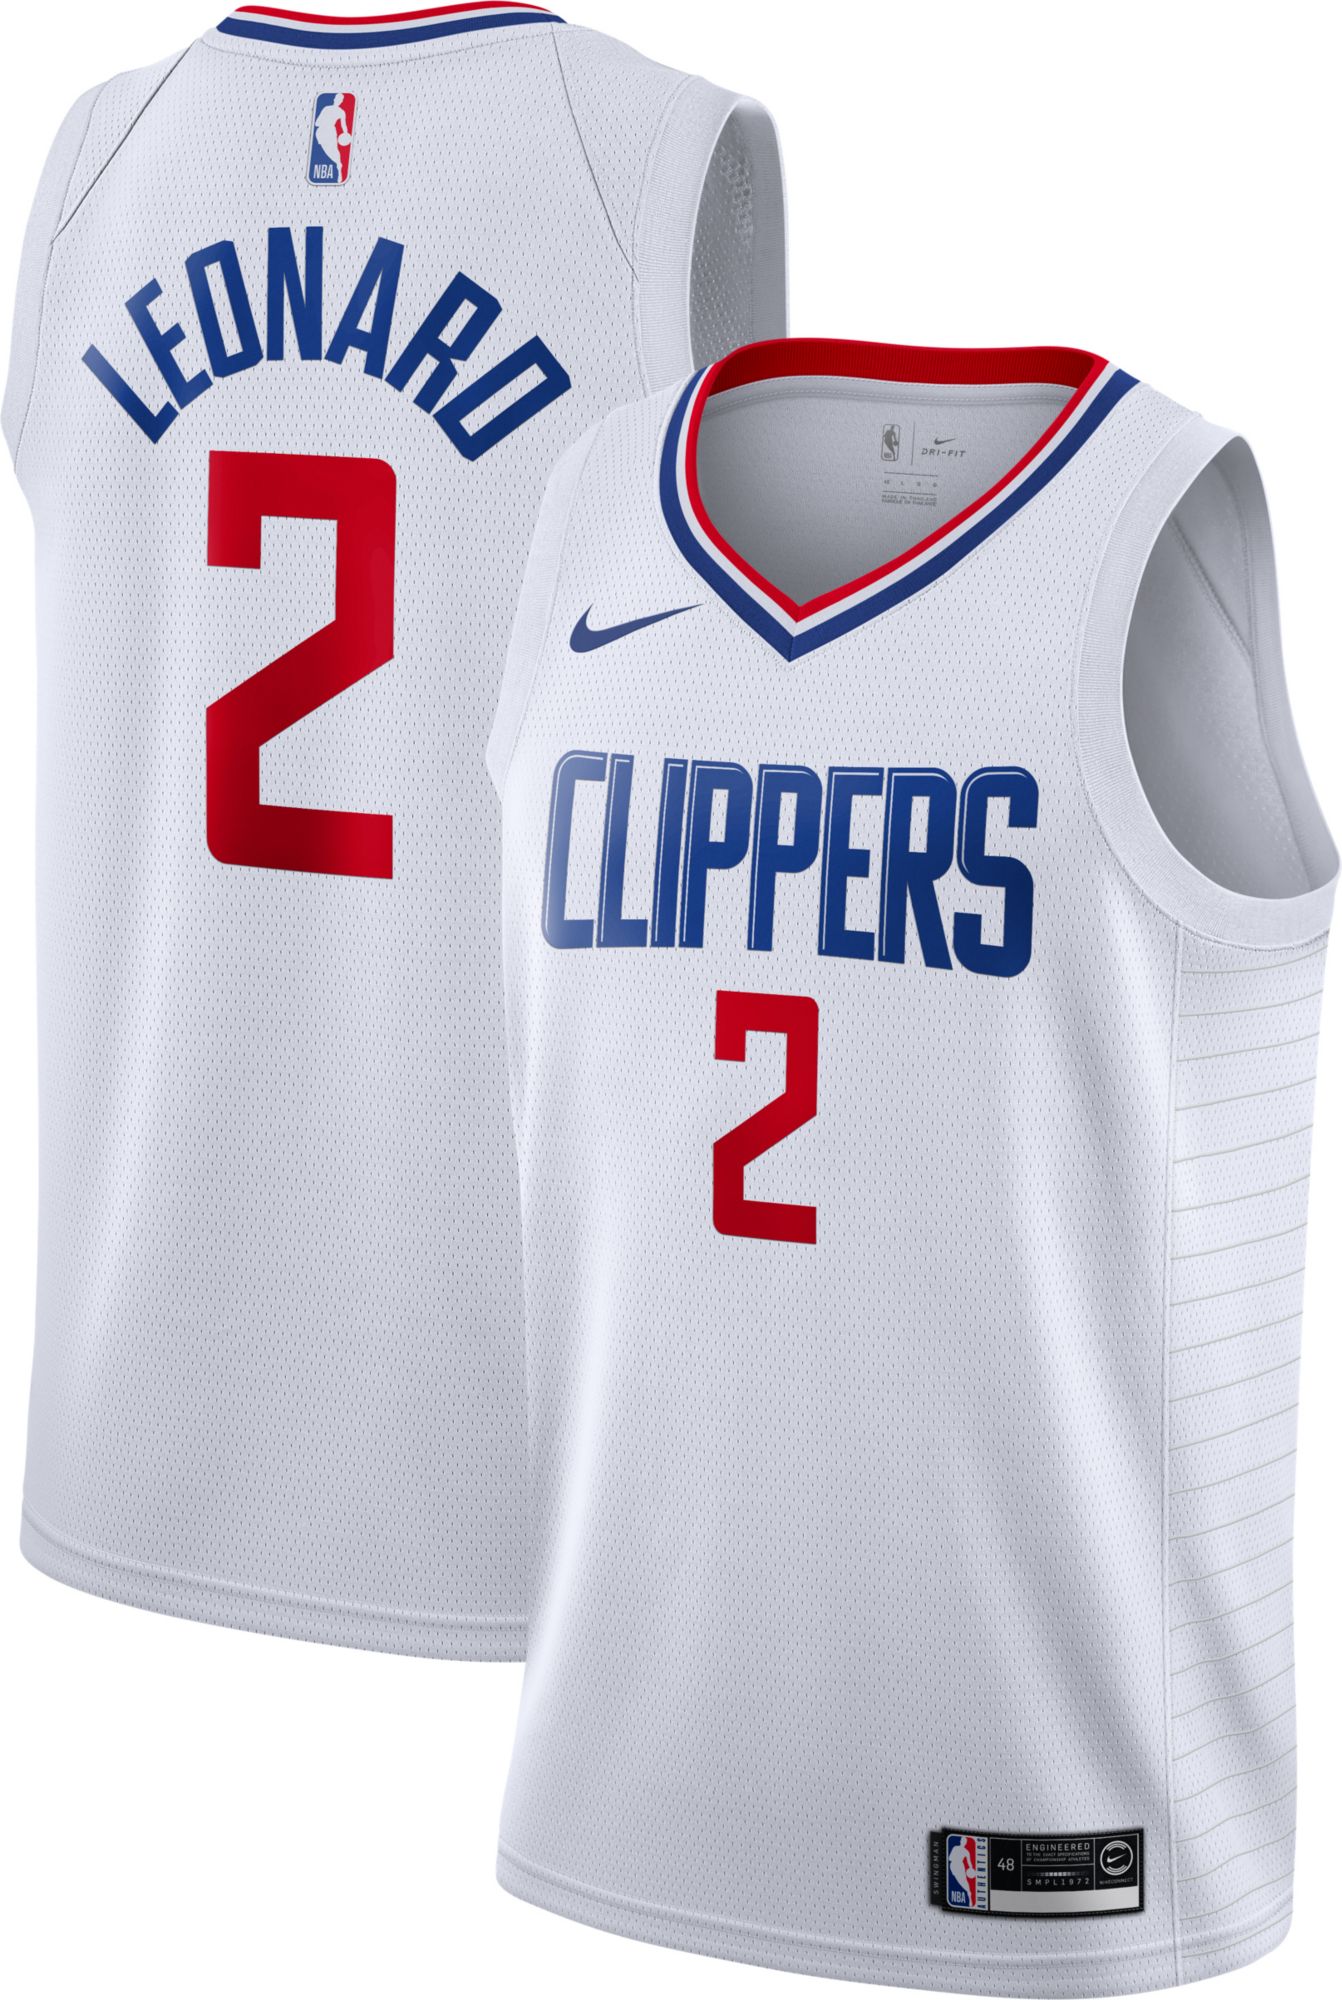 Nike Youth Los Angeles Clippers Kawhi Leonard #2 Black Dri-FIT